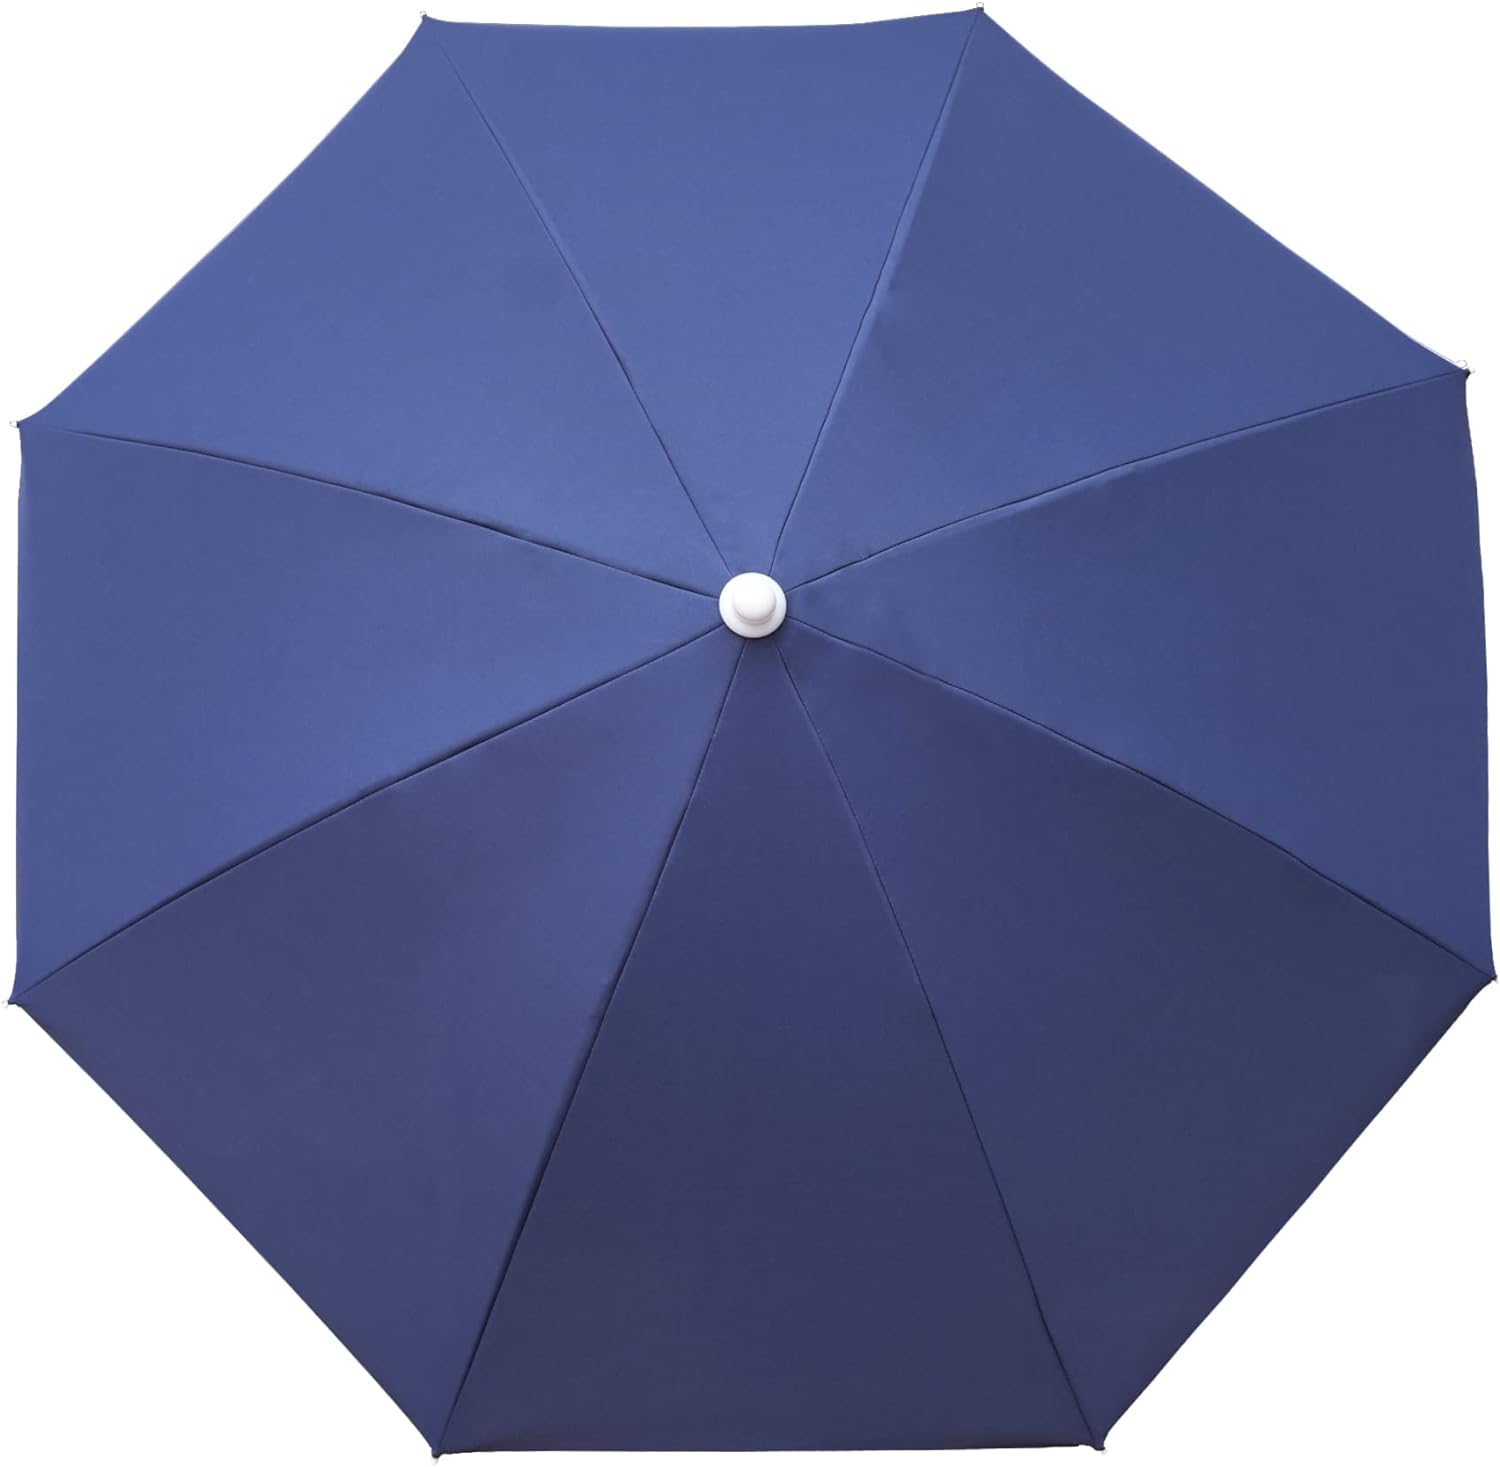 AMMSUN 6FT Portable Outdoor Picnic Beach Umbrella with Tilt Function, Blue